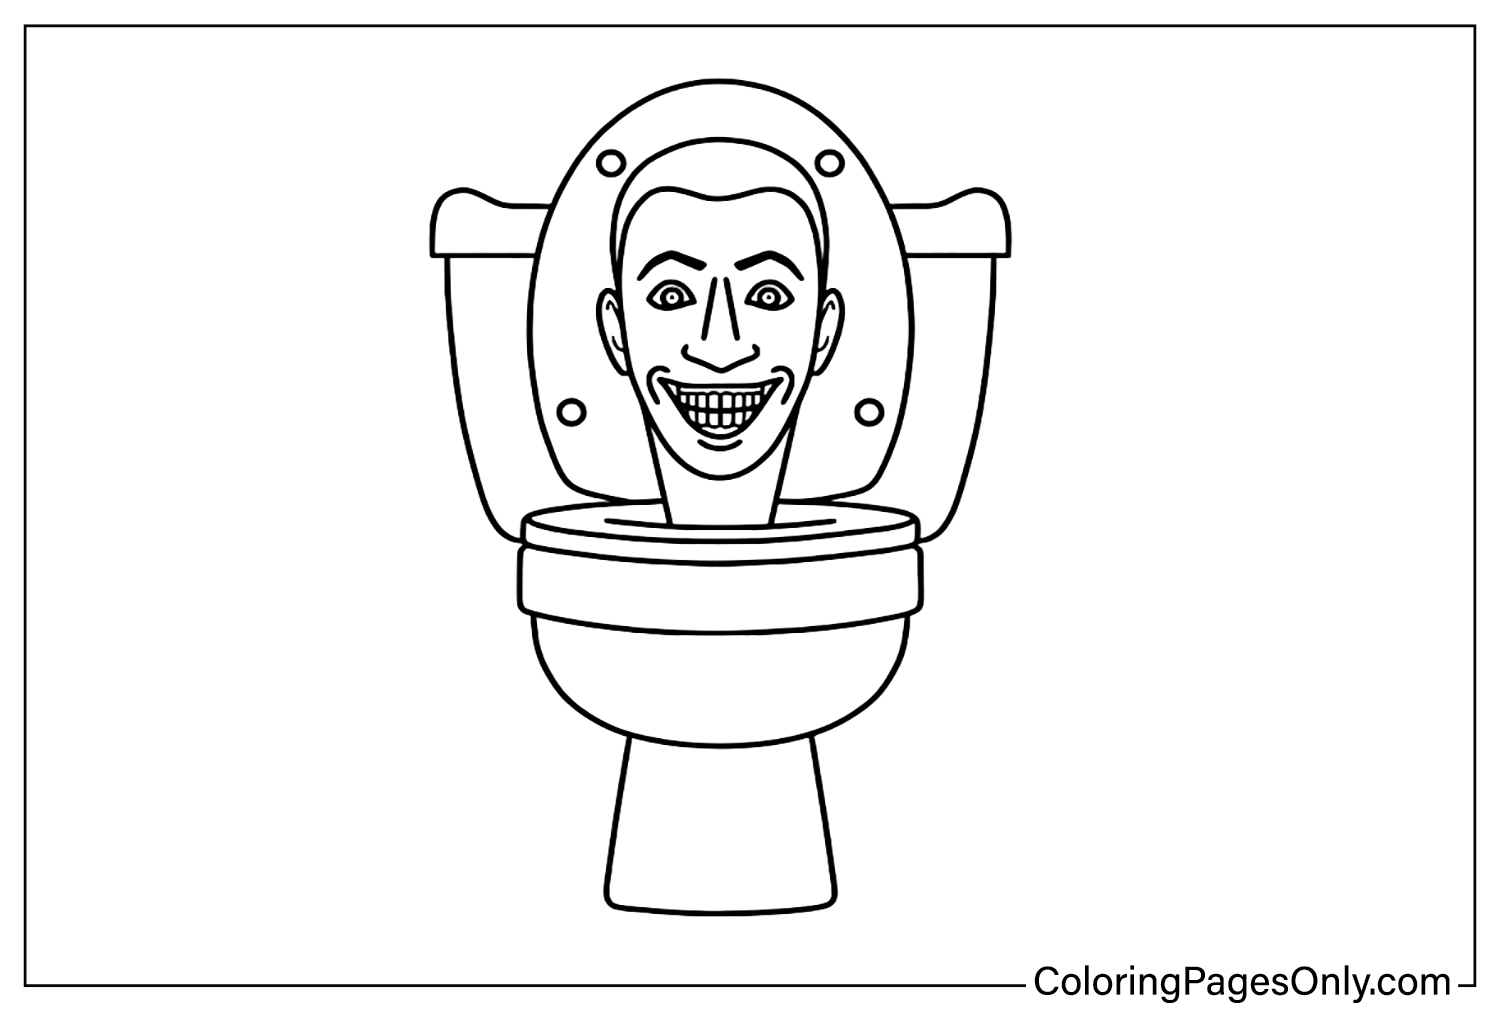 Malvorlagen Skibidi-Toilette zum Ausdrucken von Skibidi-Toilette